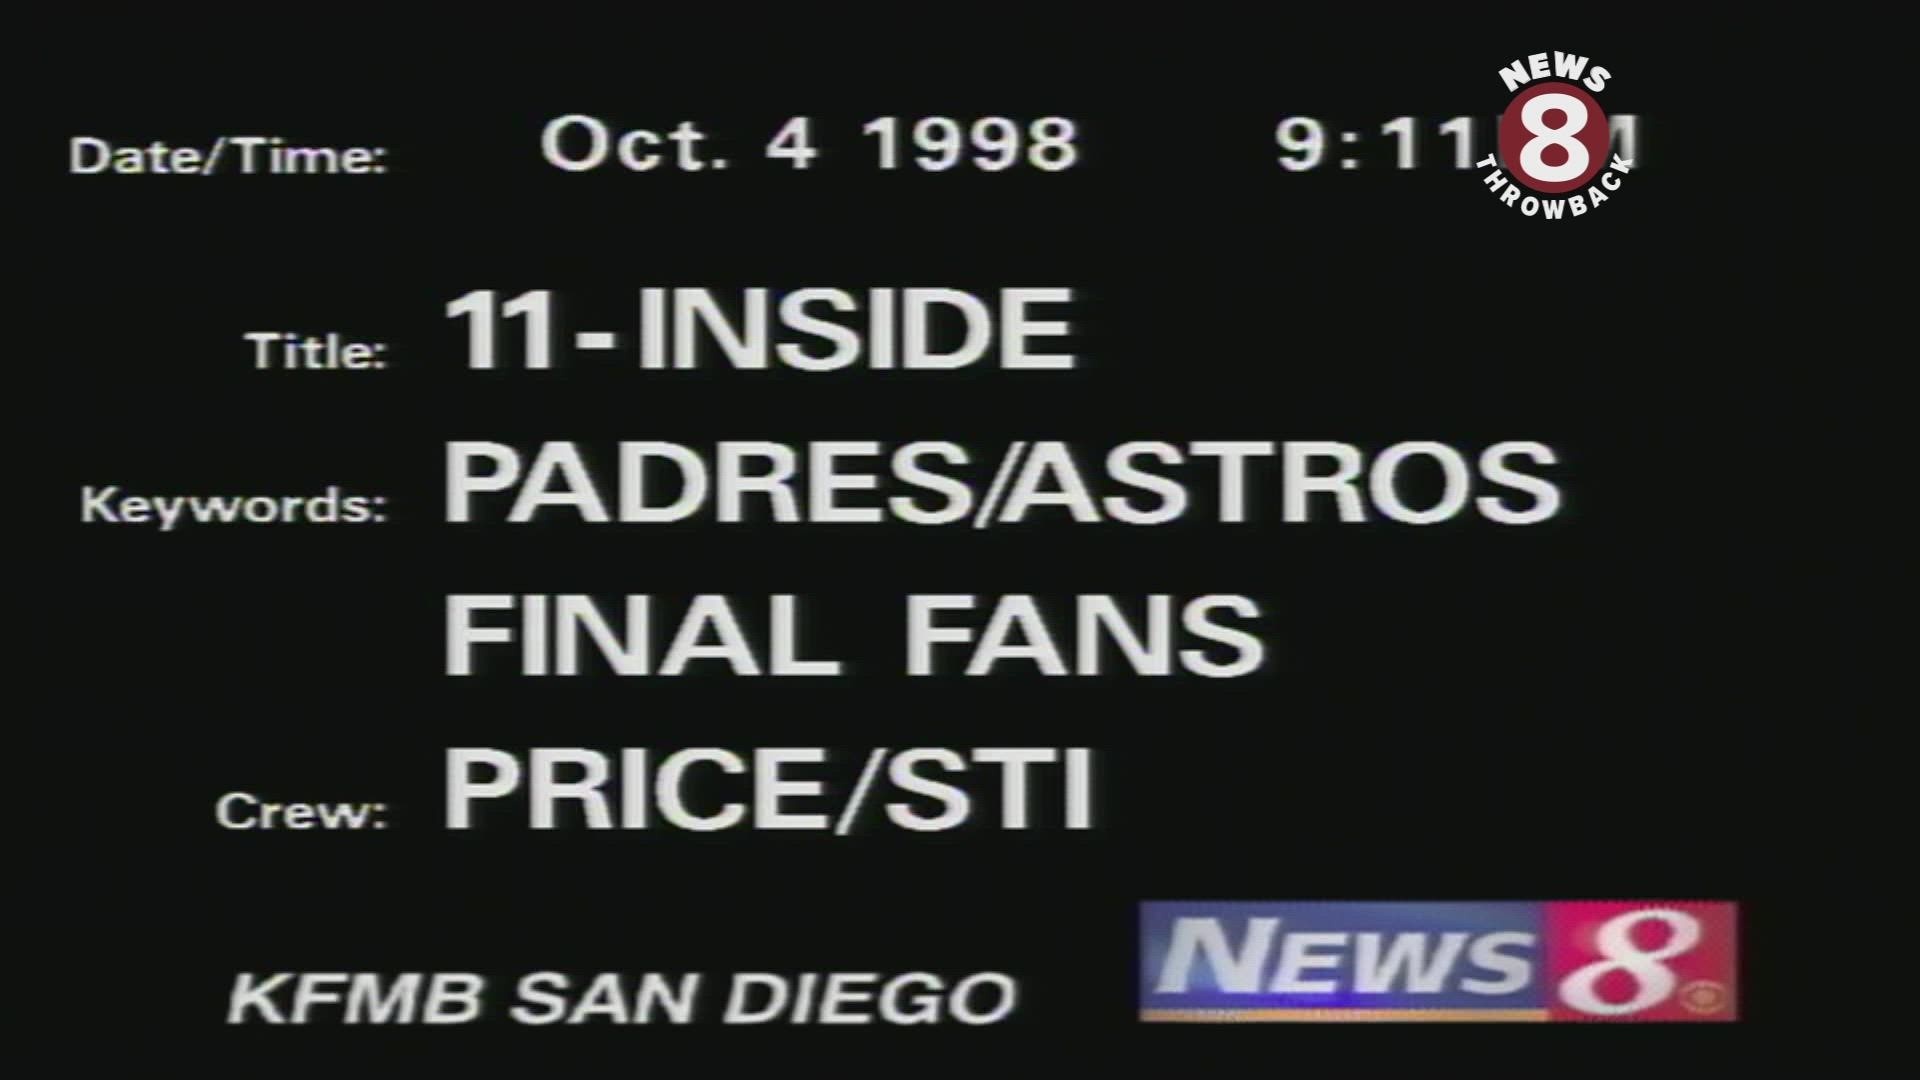 San Diego Padres in playoffs 1998